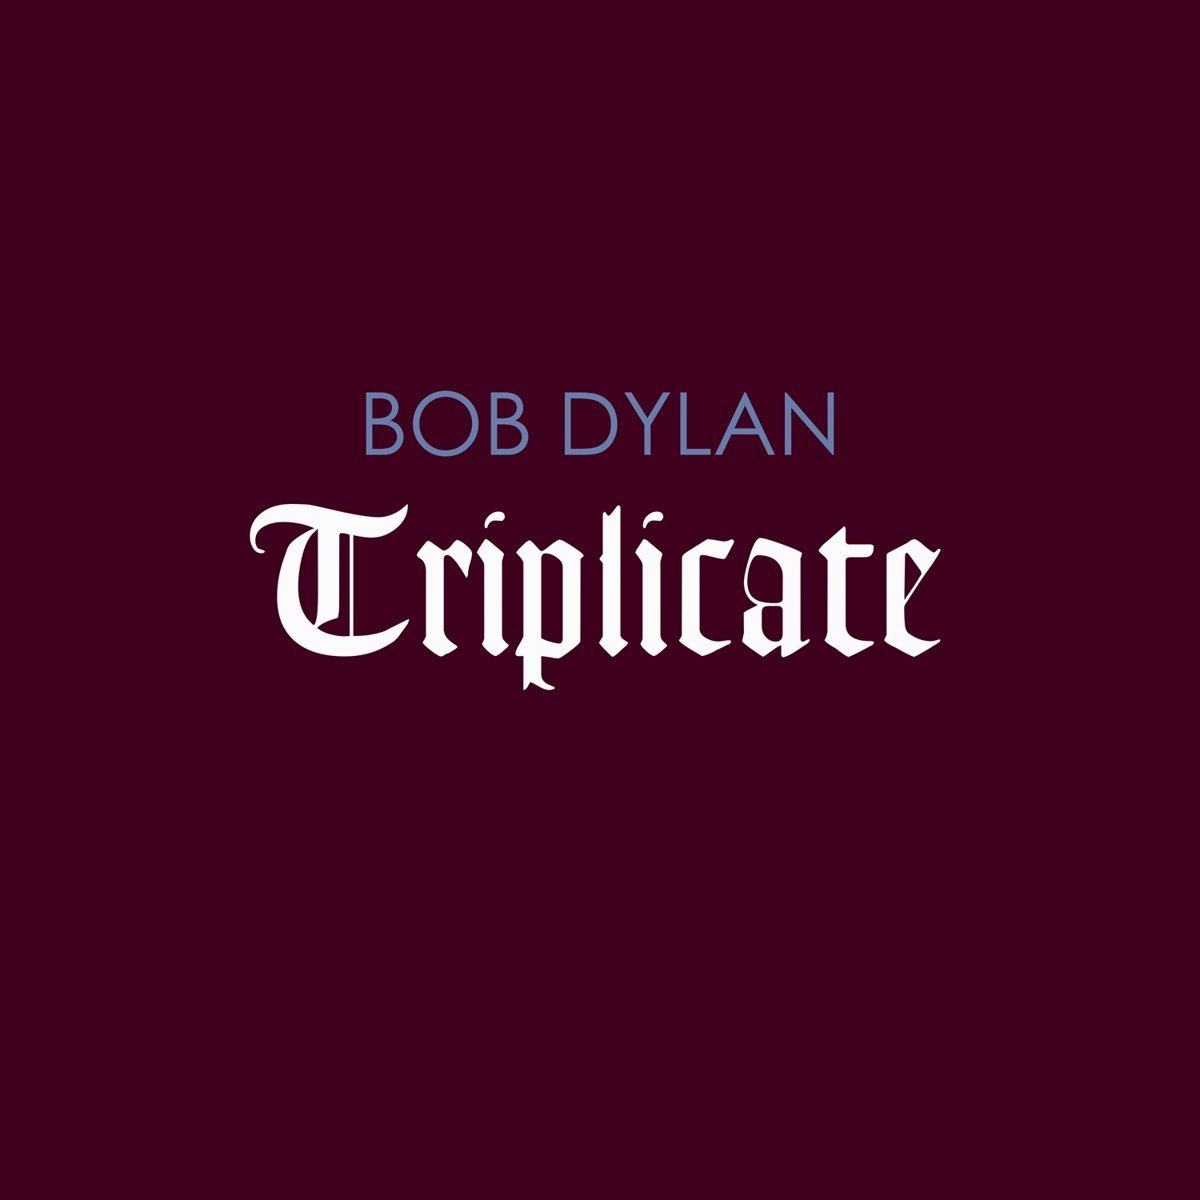 Triplicate Deluxe Edition 180g 3lp Bob Dylan ボブ ディラン Old Rock ディスクユニオン オンラインショップ Diskunion Net